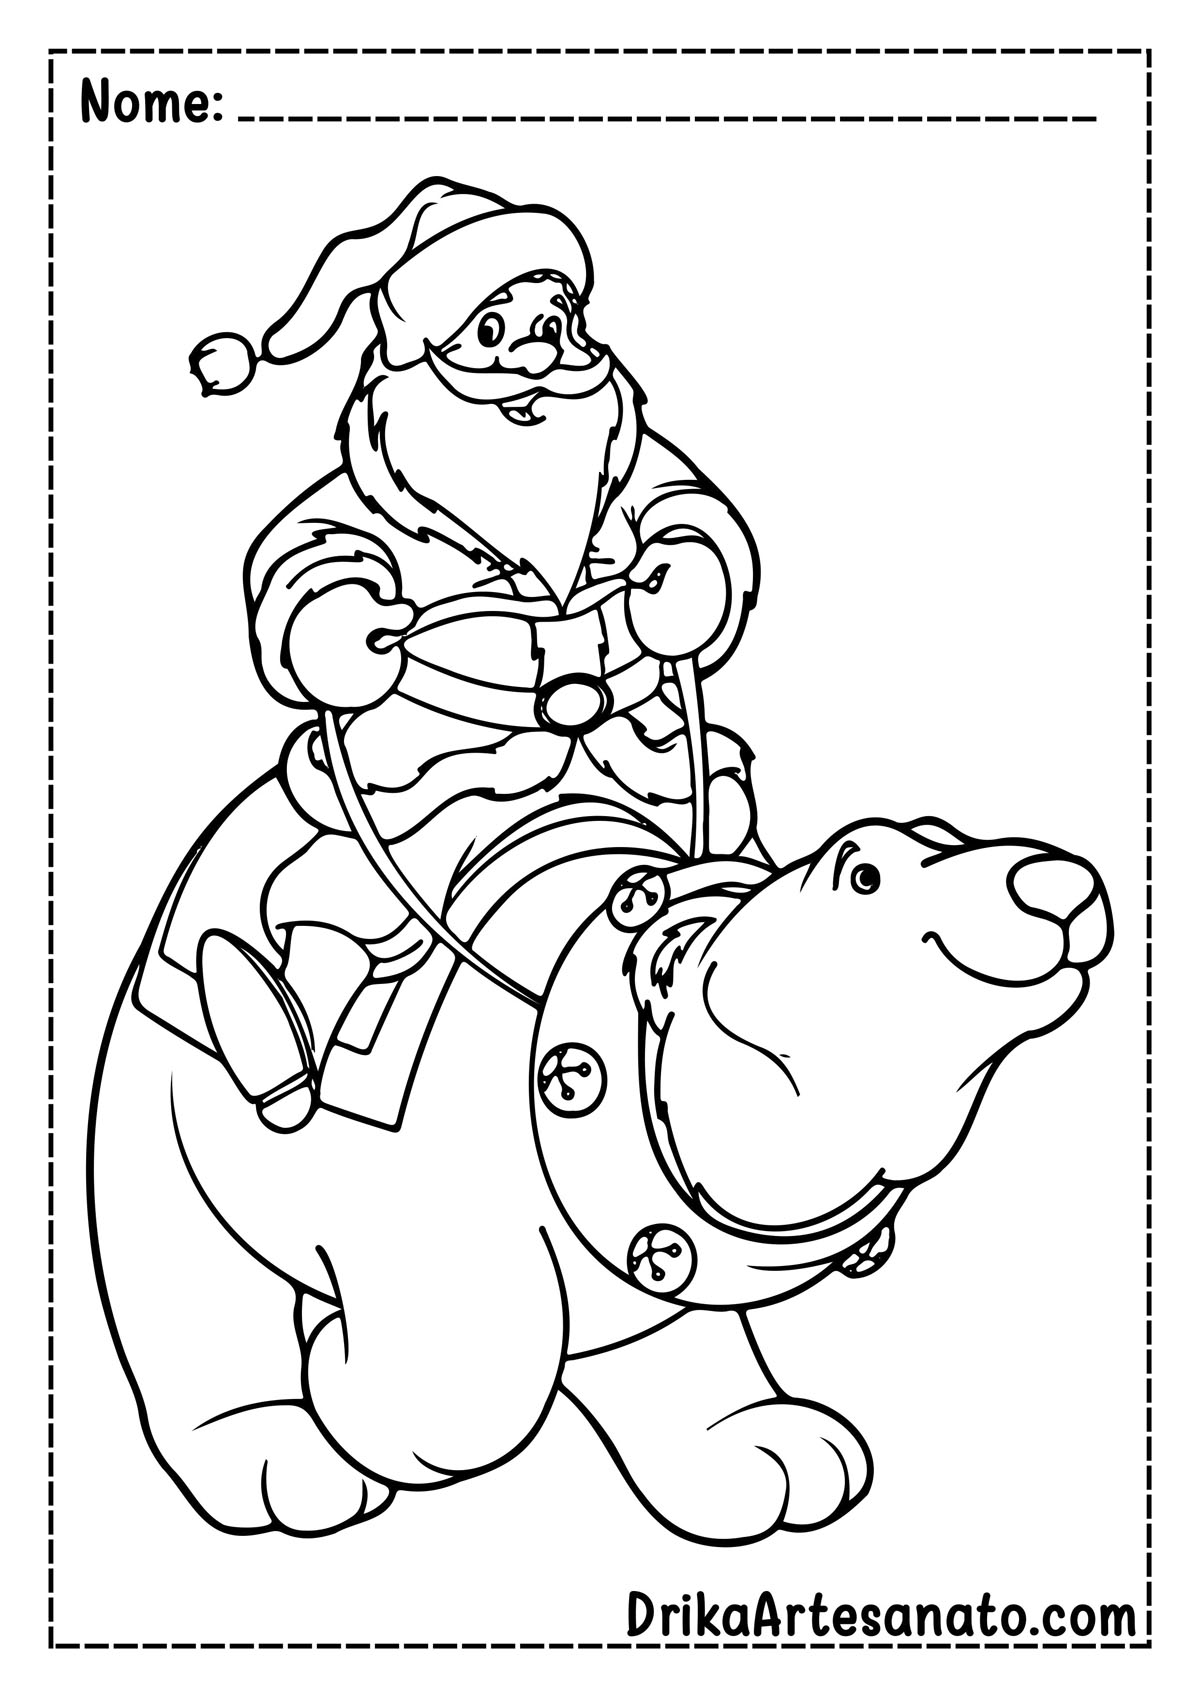 Desenho de Papai Noel para Imprimir e Pintar